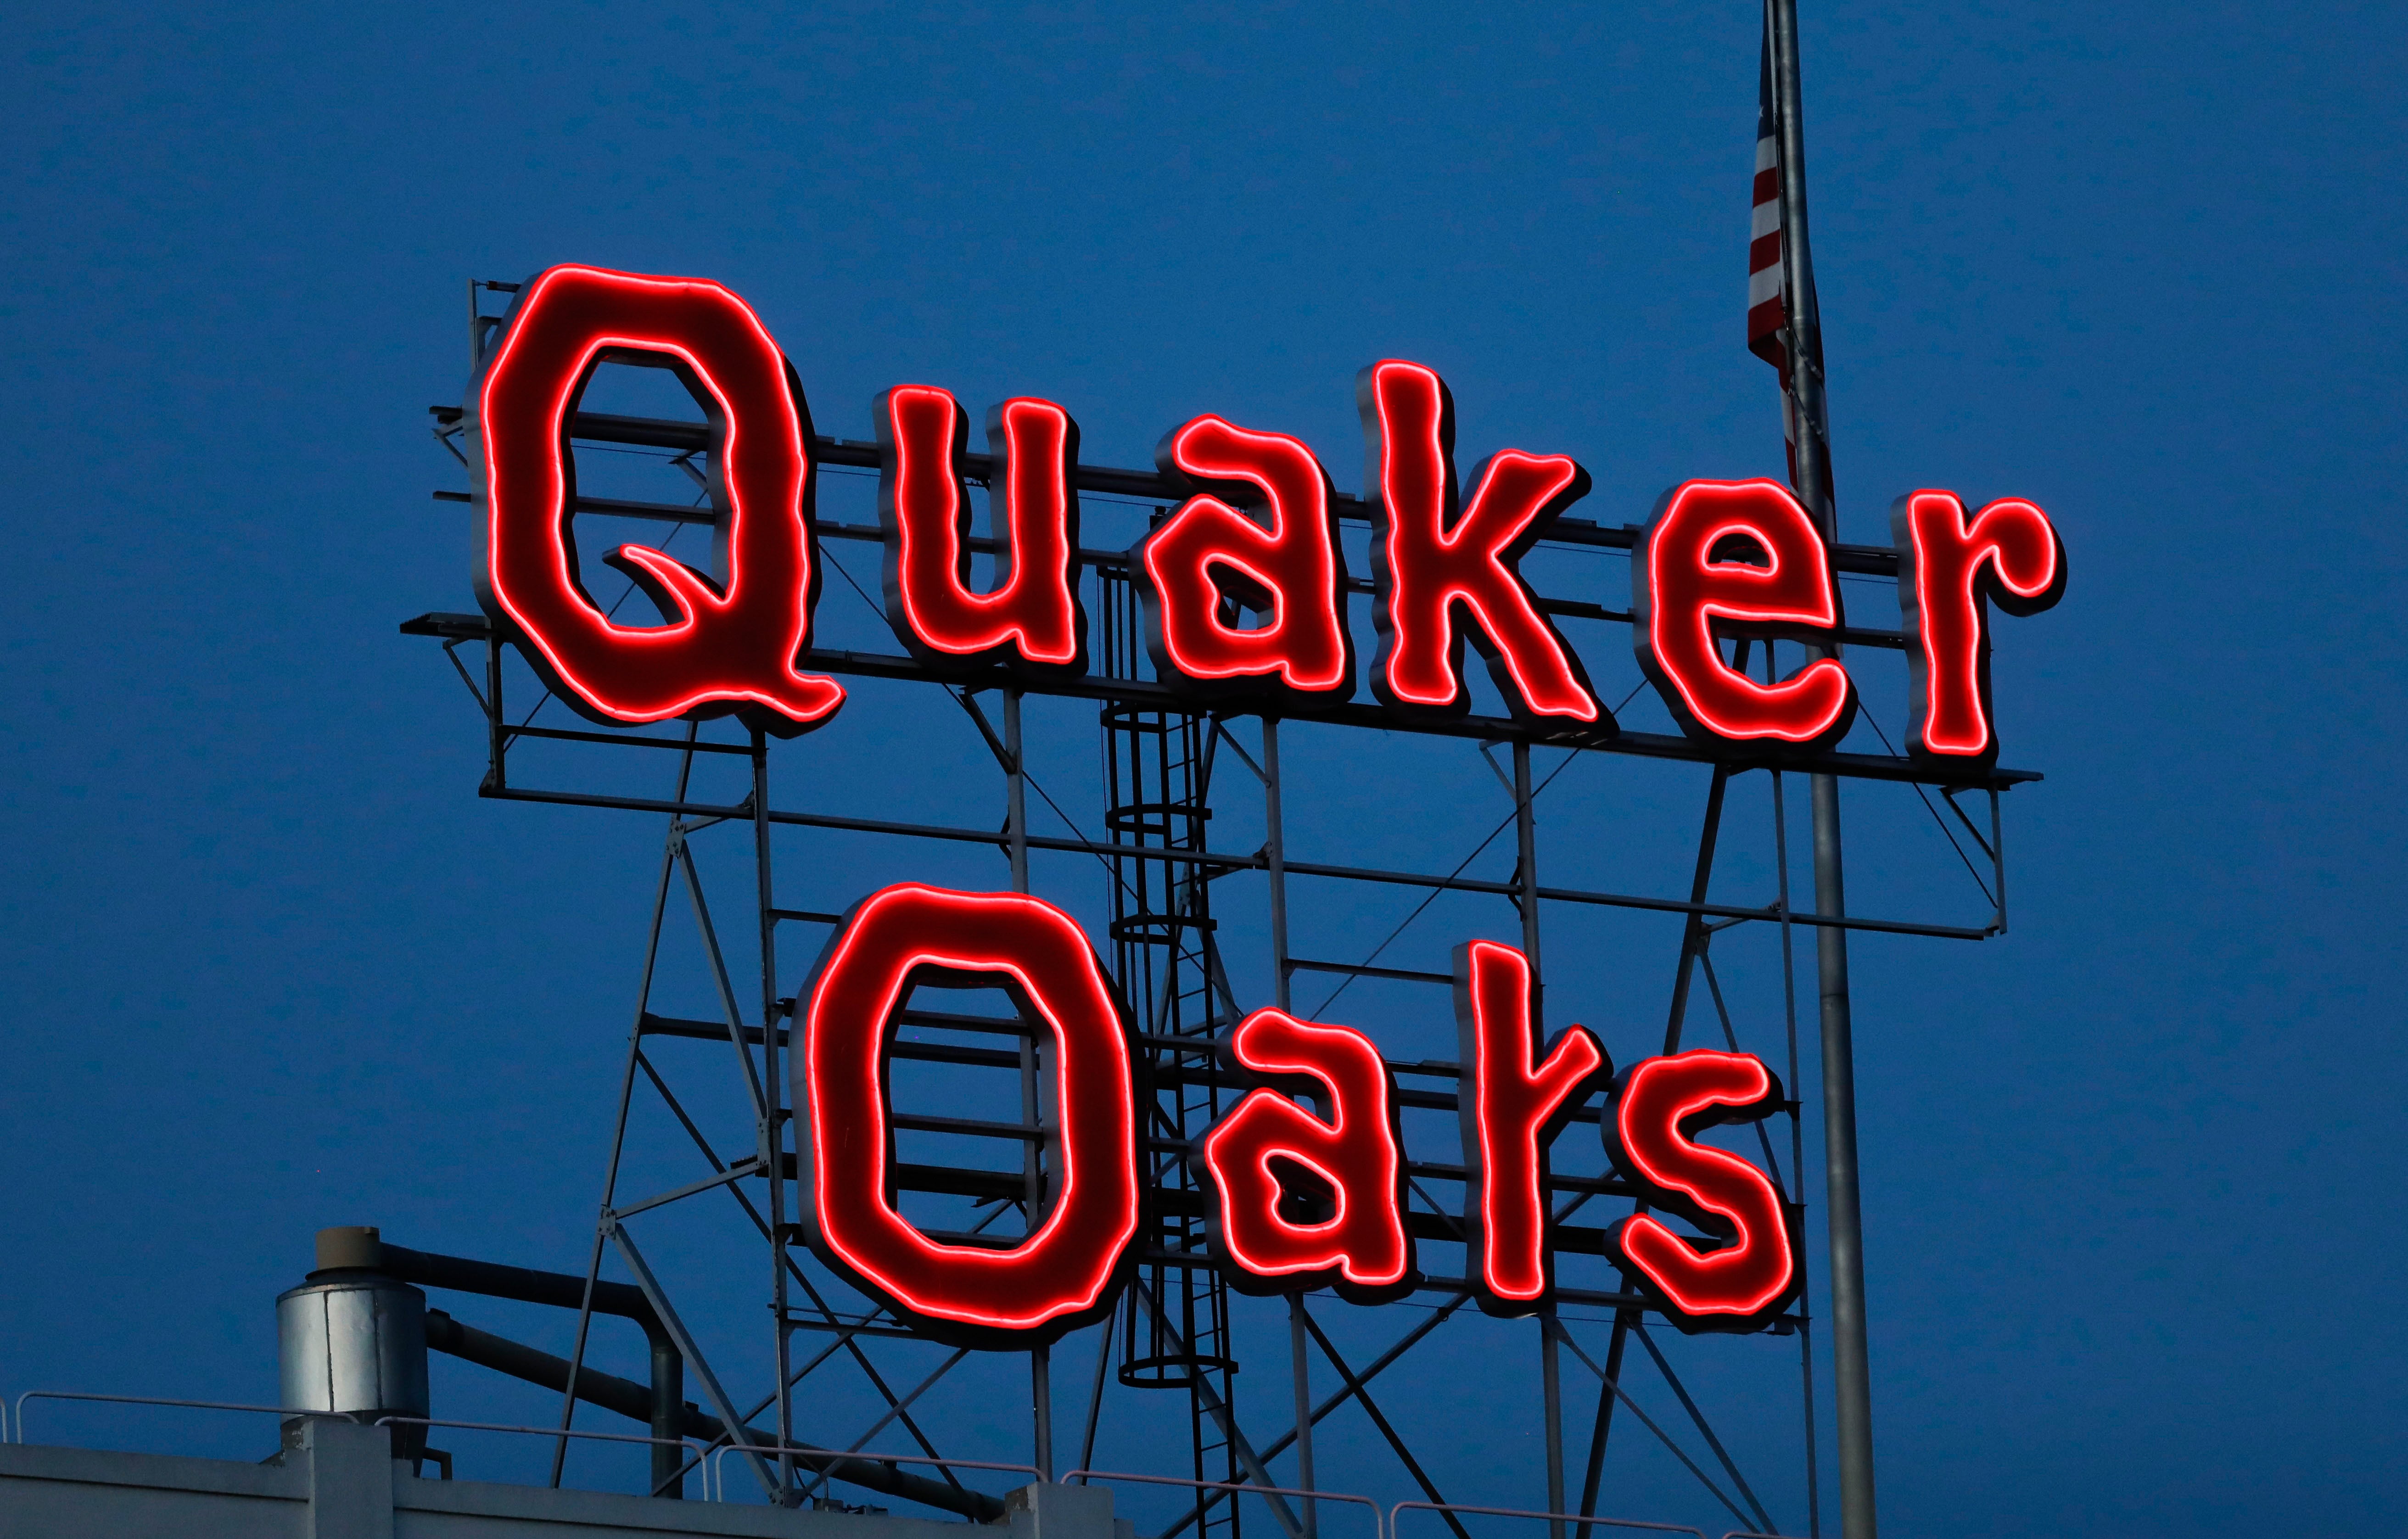 Quaker Oats recalls granola products over concerns of salmonella